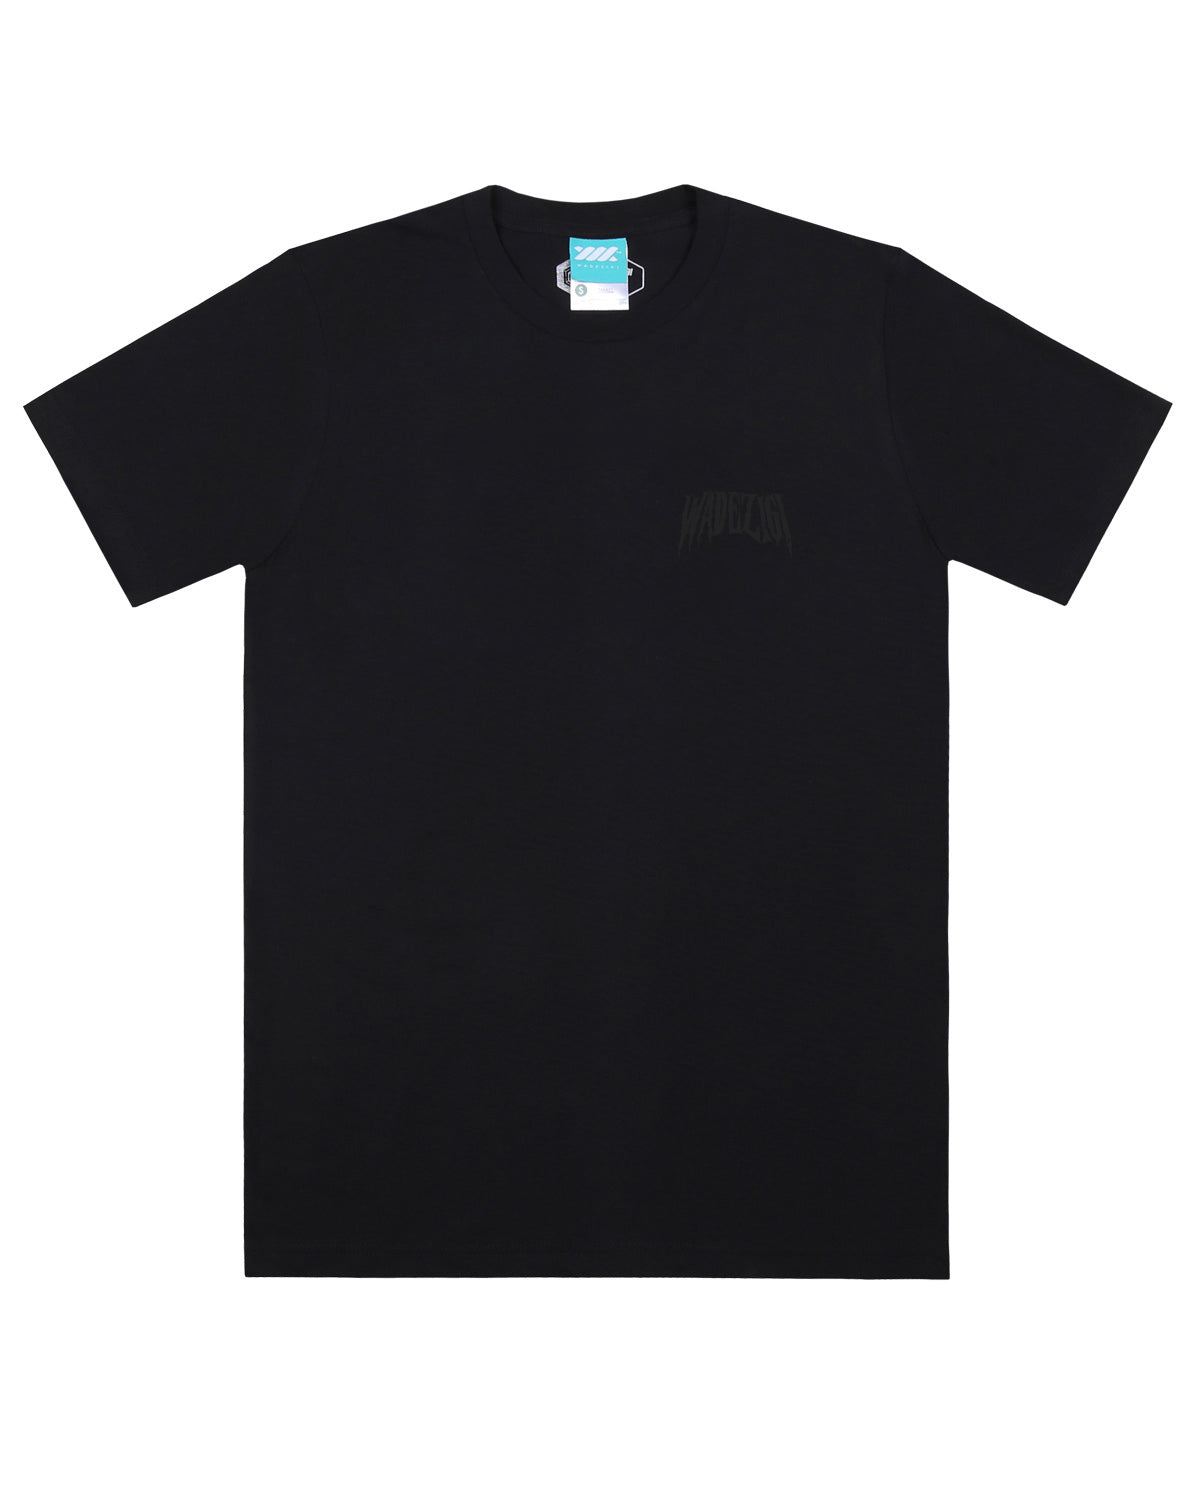 Wadezig! T-Shirt - Offering Black